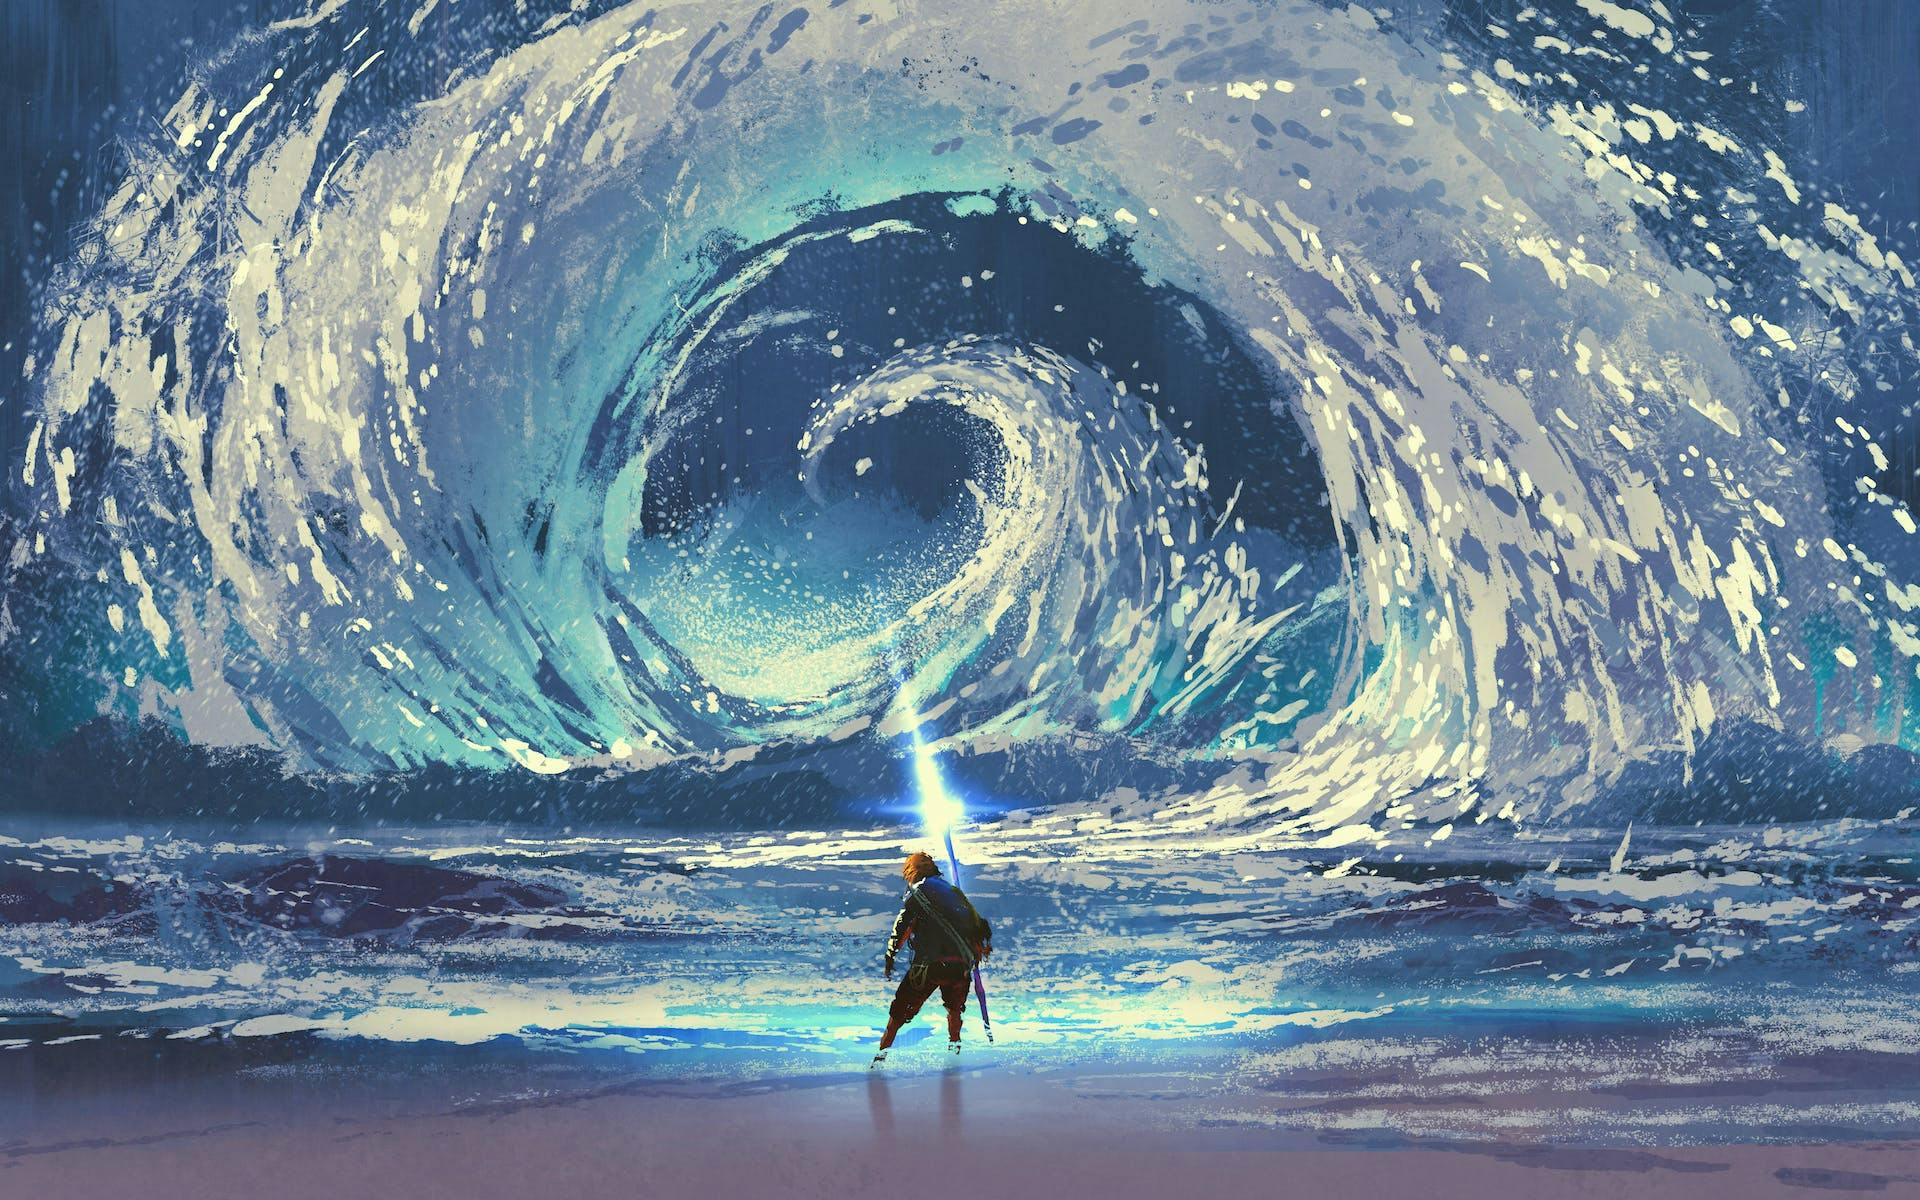 Wizard facing a large wave